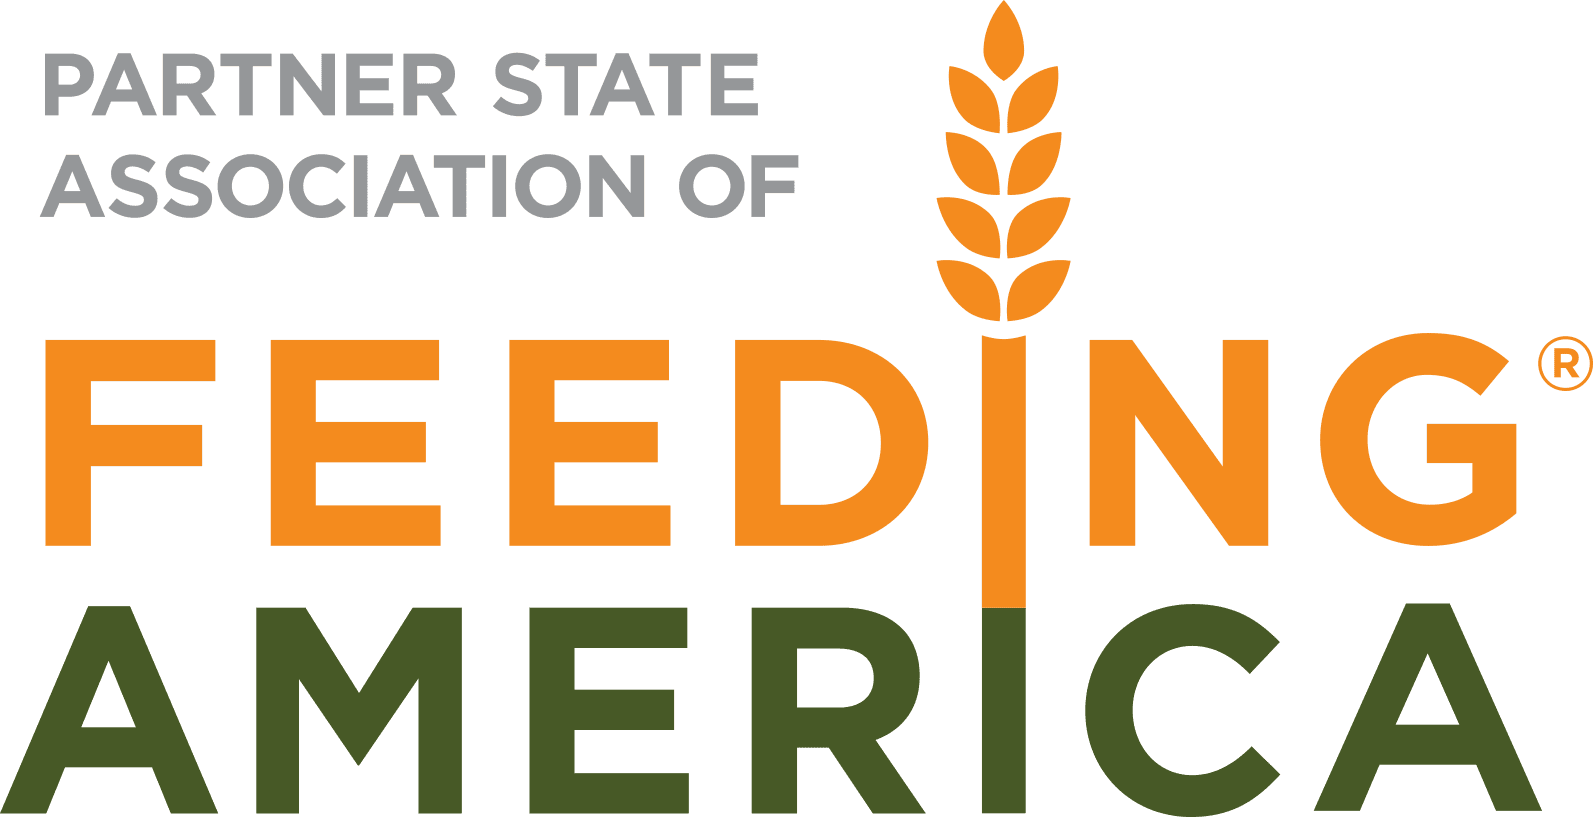 Partner State Association of Feeding America